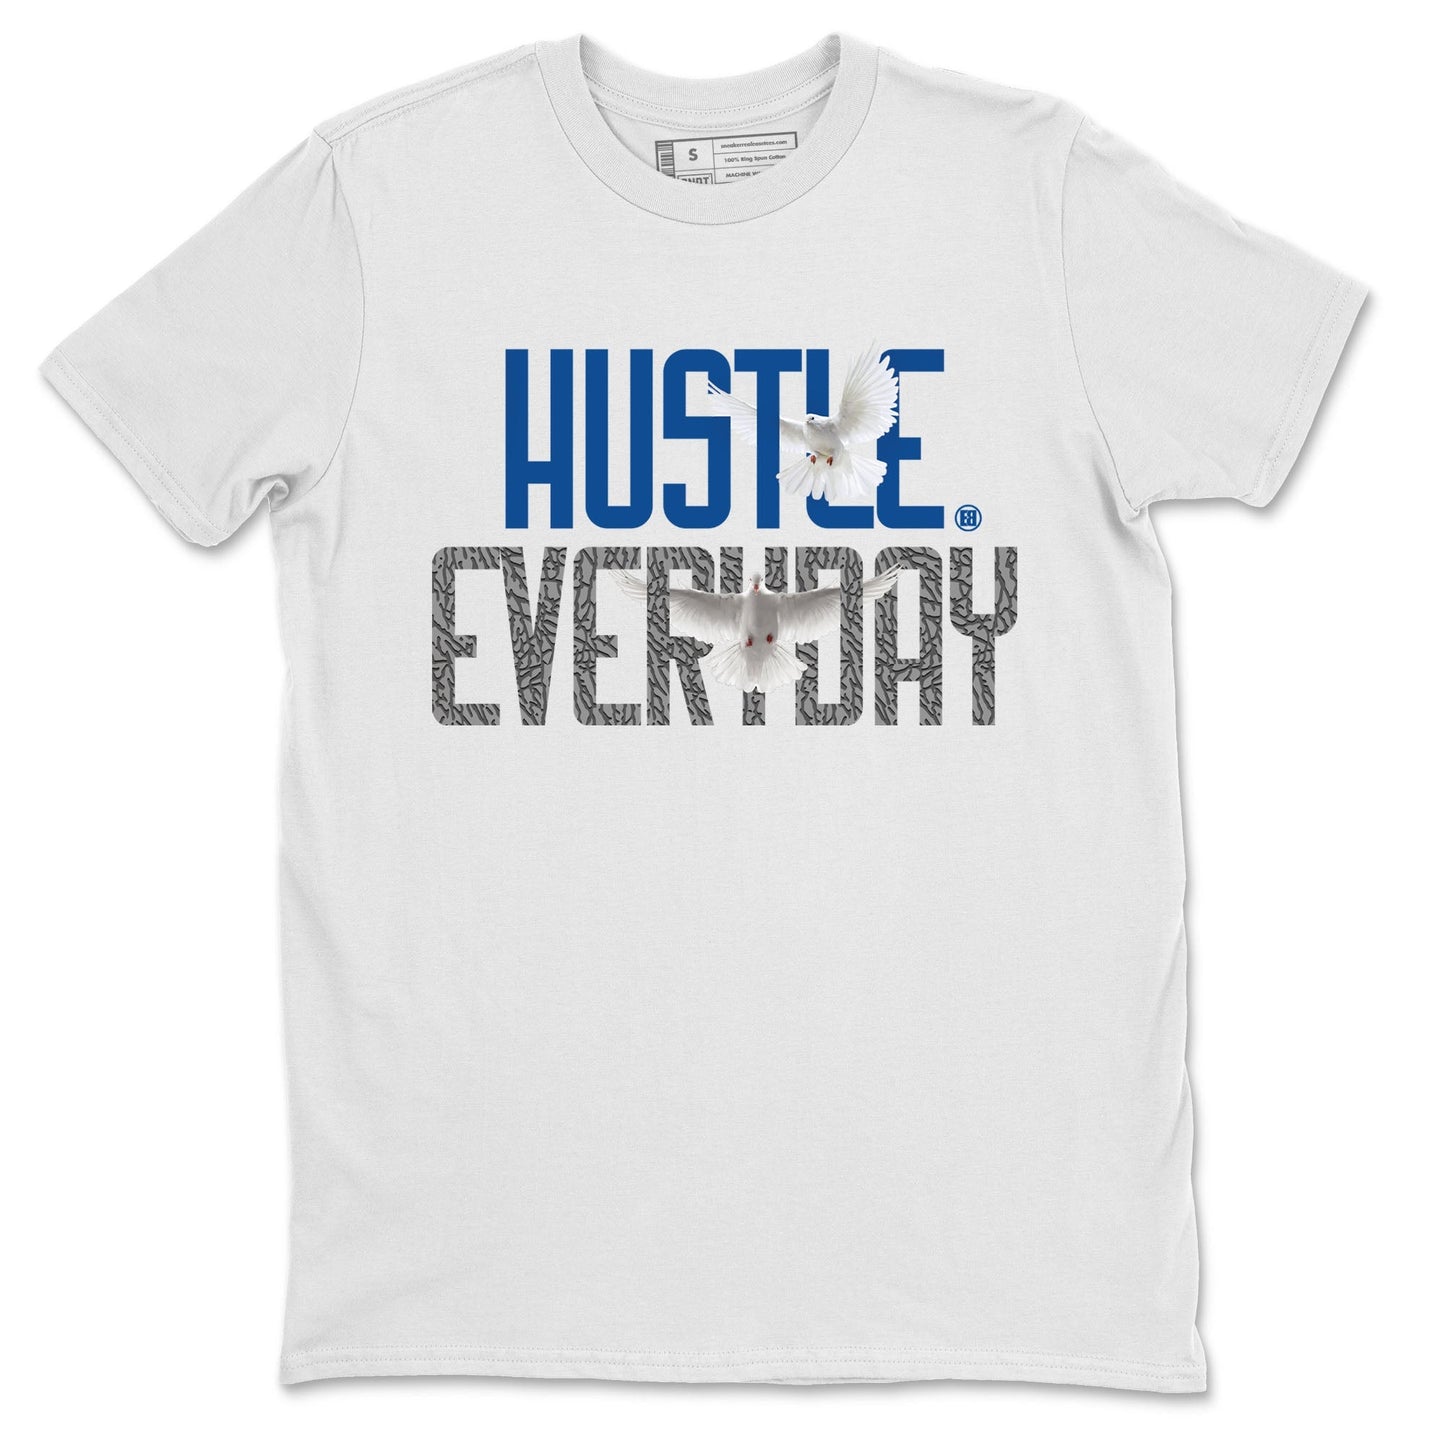 Air Jordan 3 Wizards Sneaker Match Tees Daily Hustle Shirts Air Jordan 3 Wizards Shirts Unisex Shirts White 2